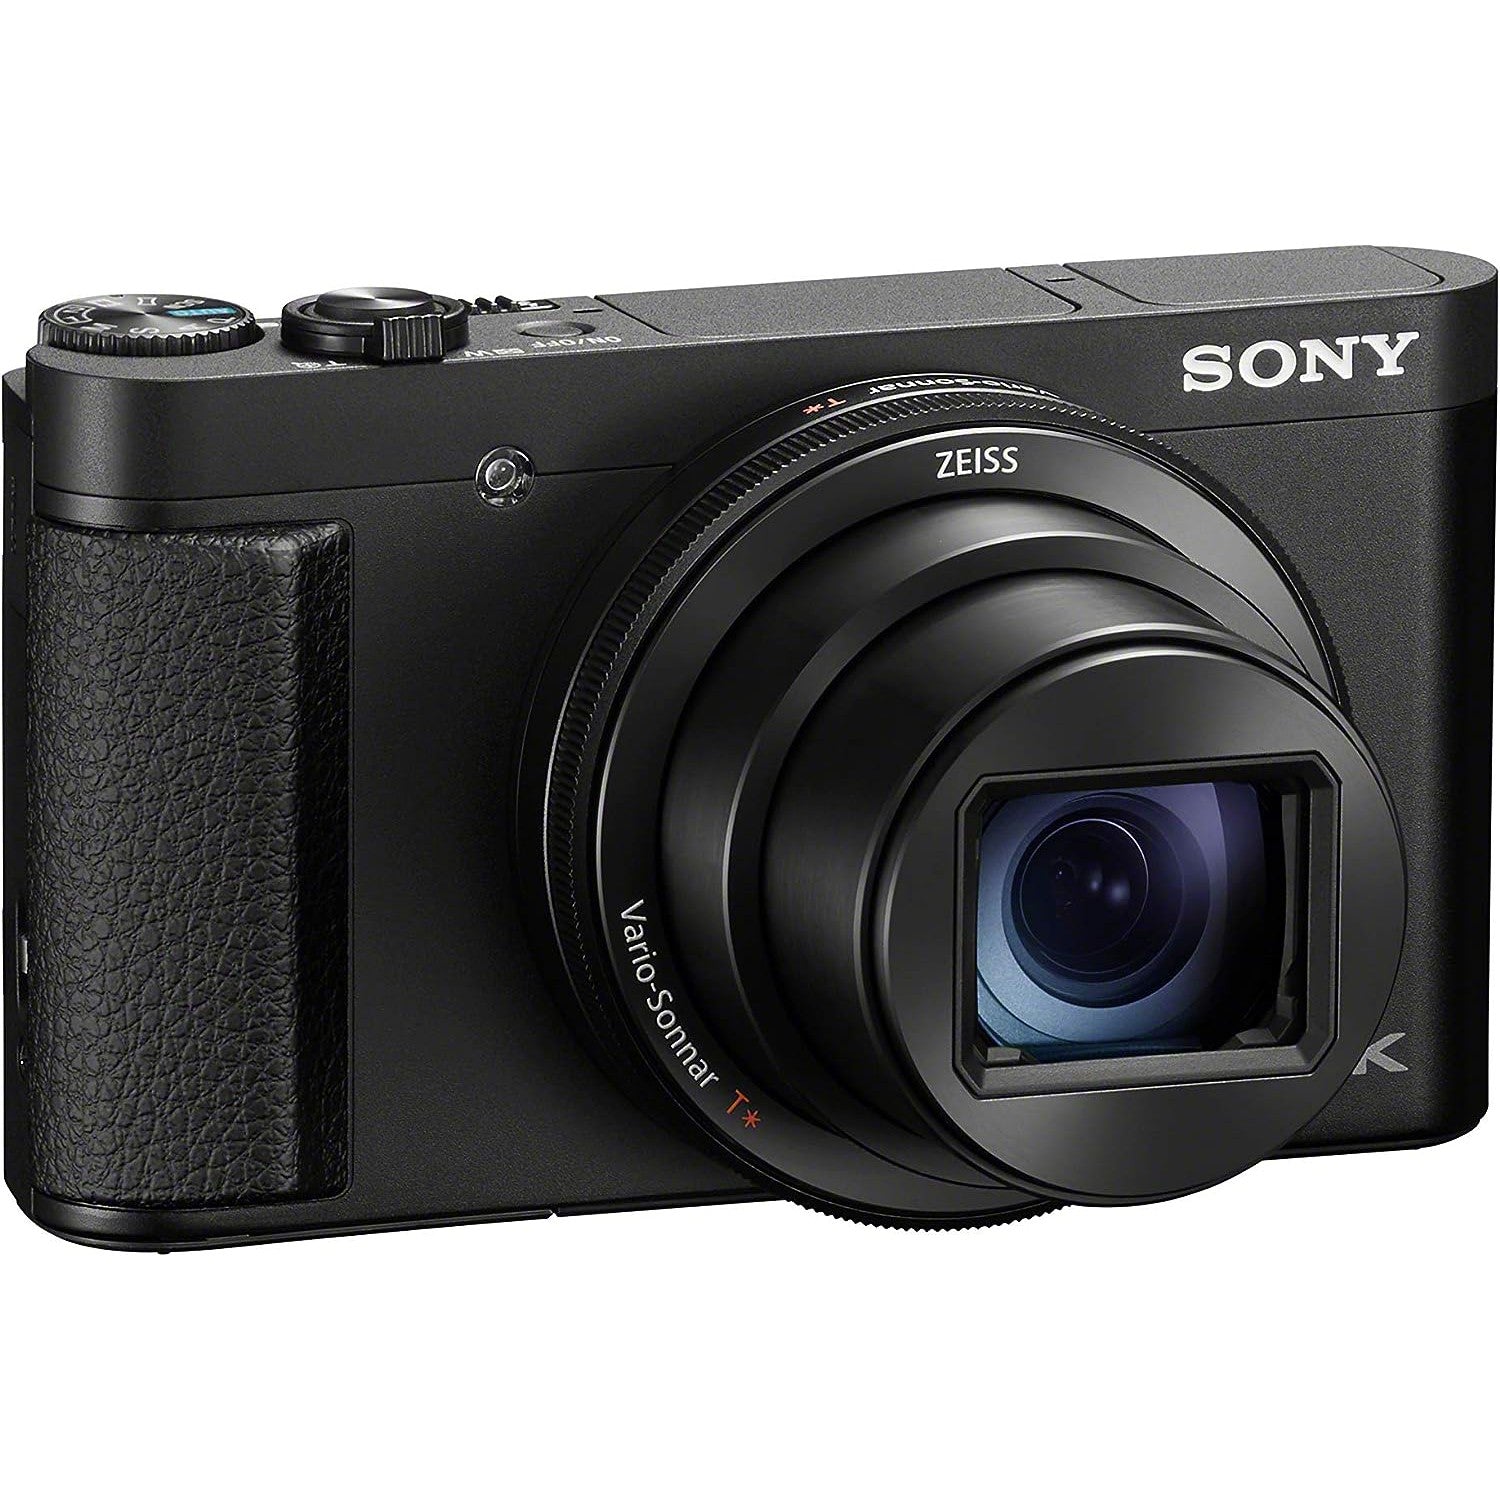 Sony DSC-HX99 Compact Digital 18.2 MP Camera with 24-720 mm Zoom – Black - Refurbished Pristine